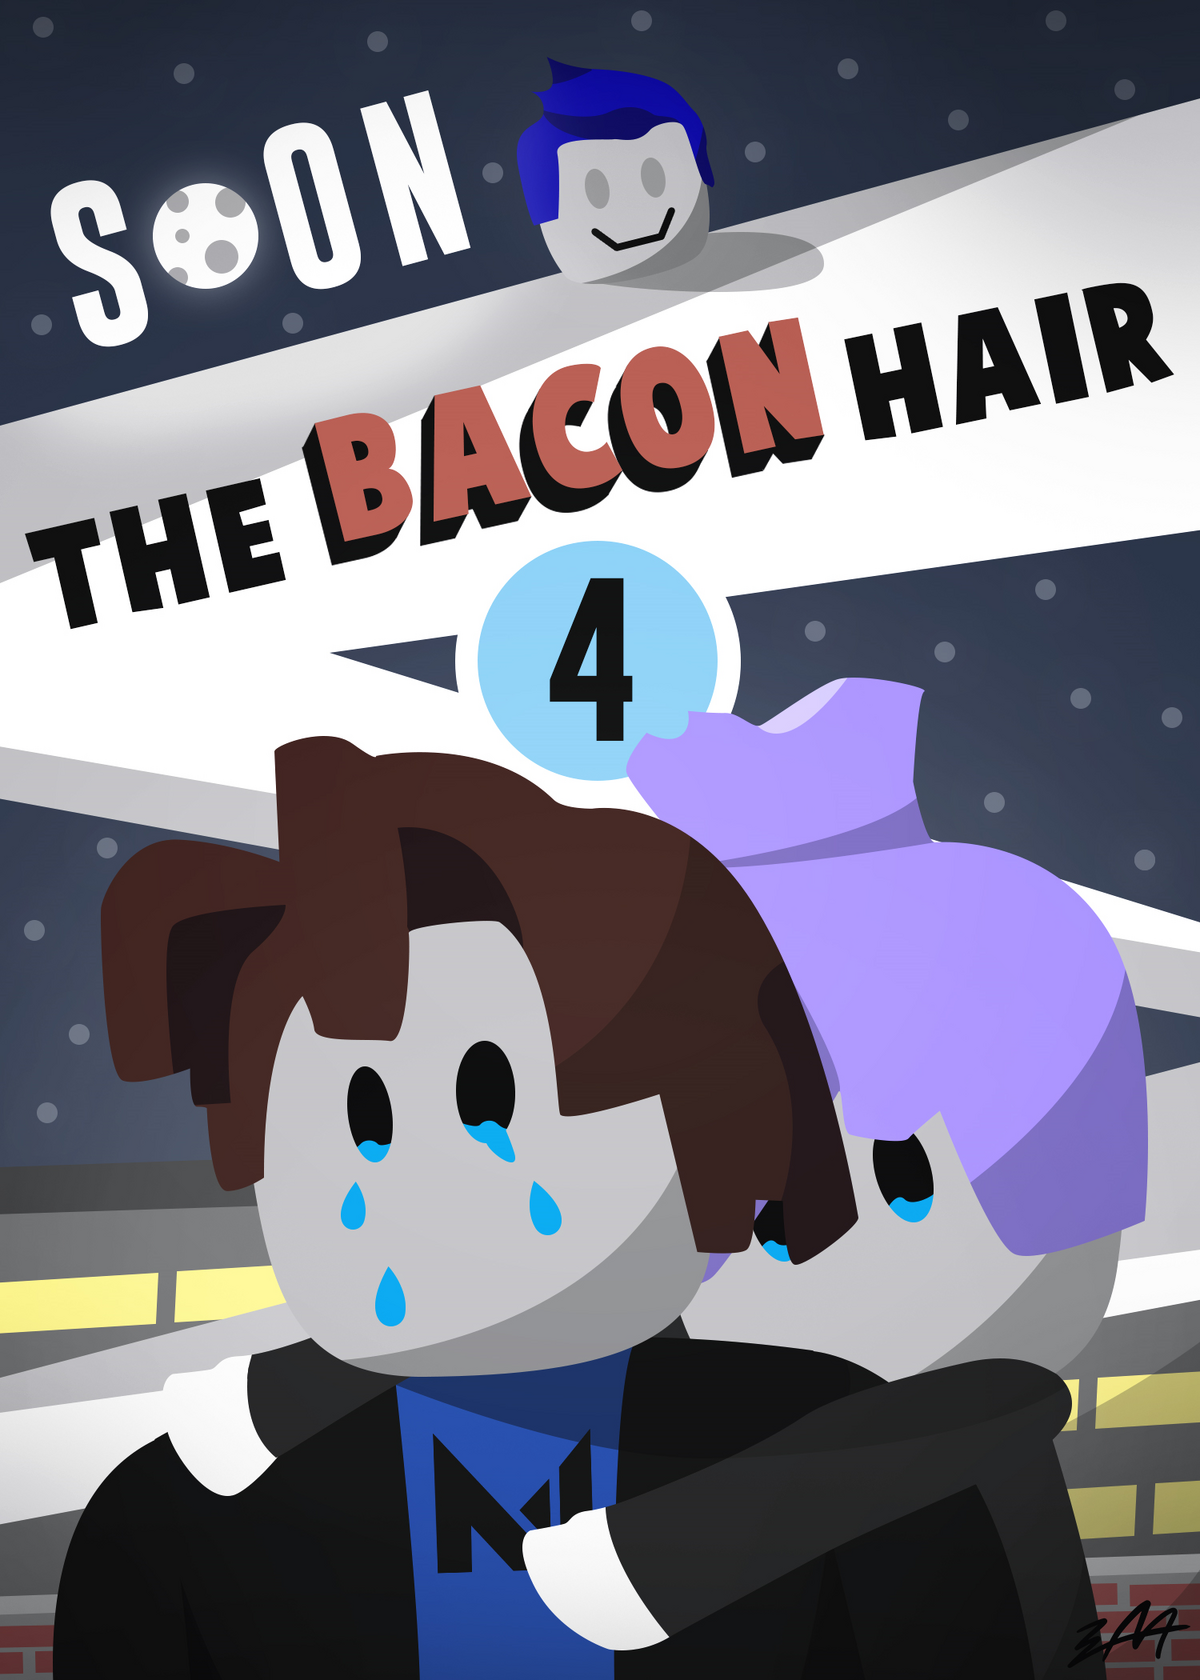 Bacon Hair in 4K's Code & Price - RblxTrade